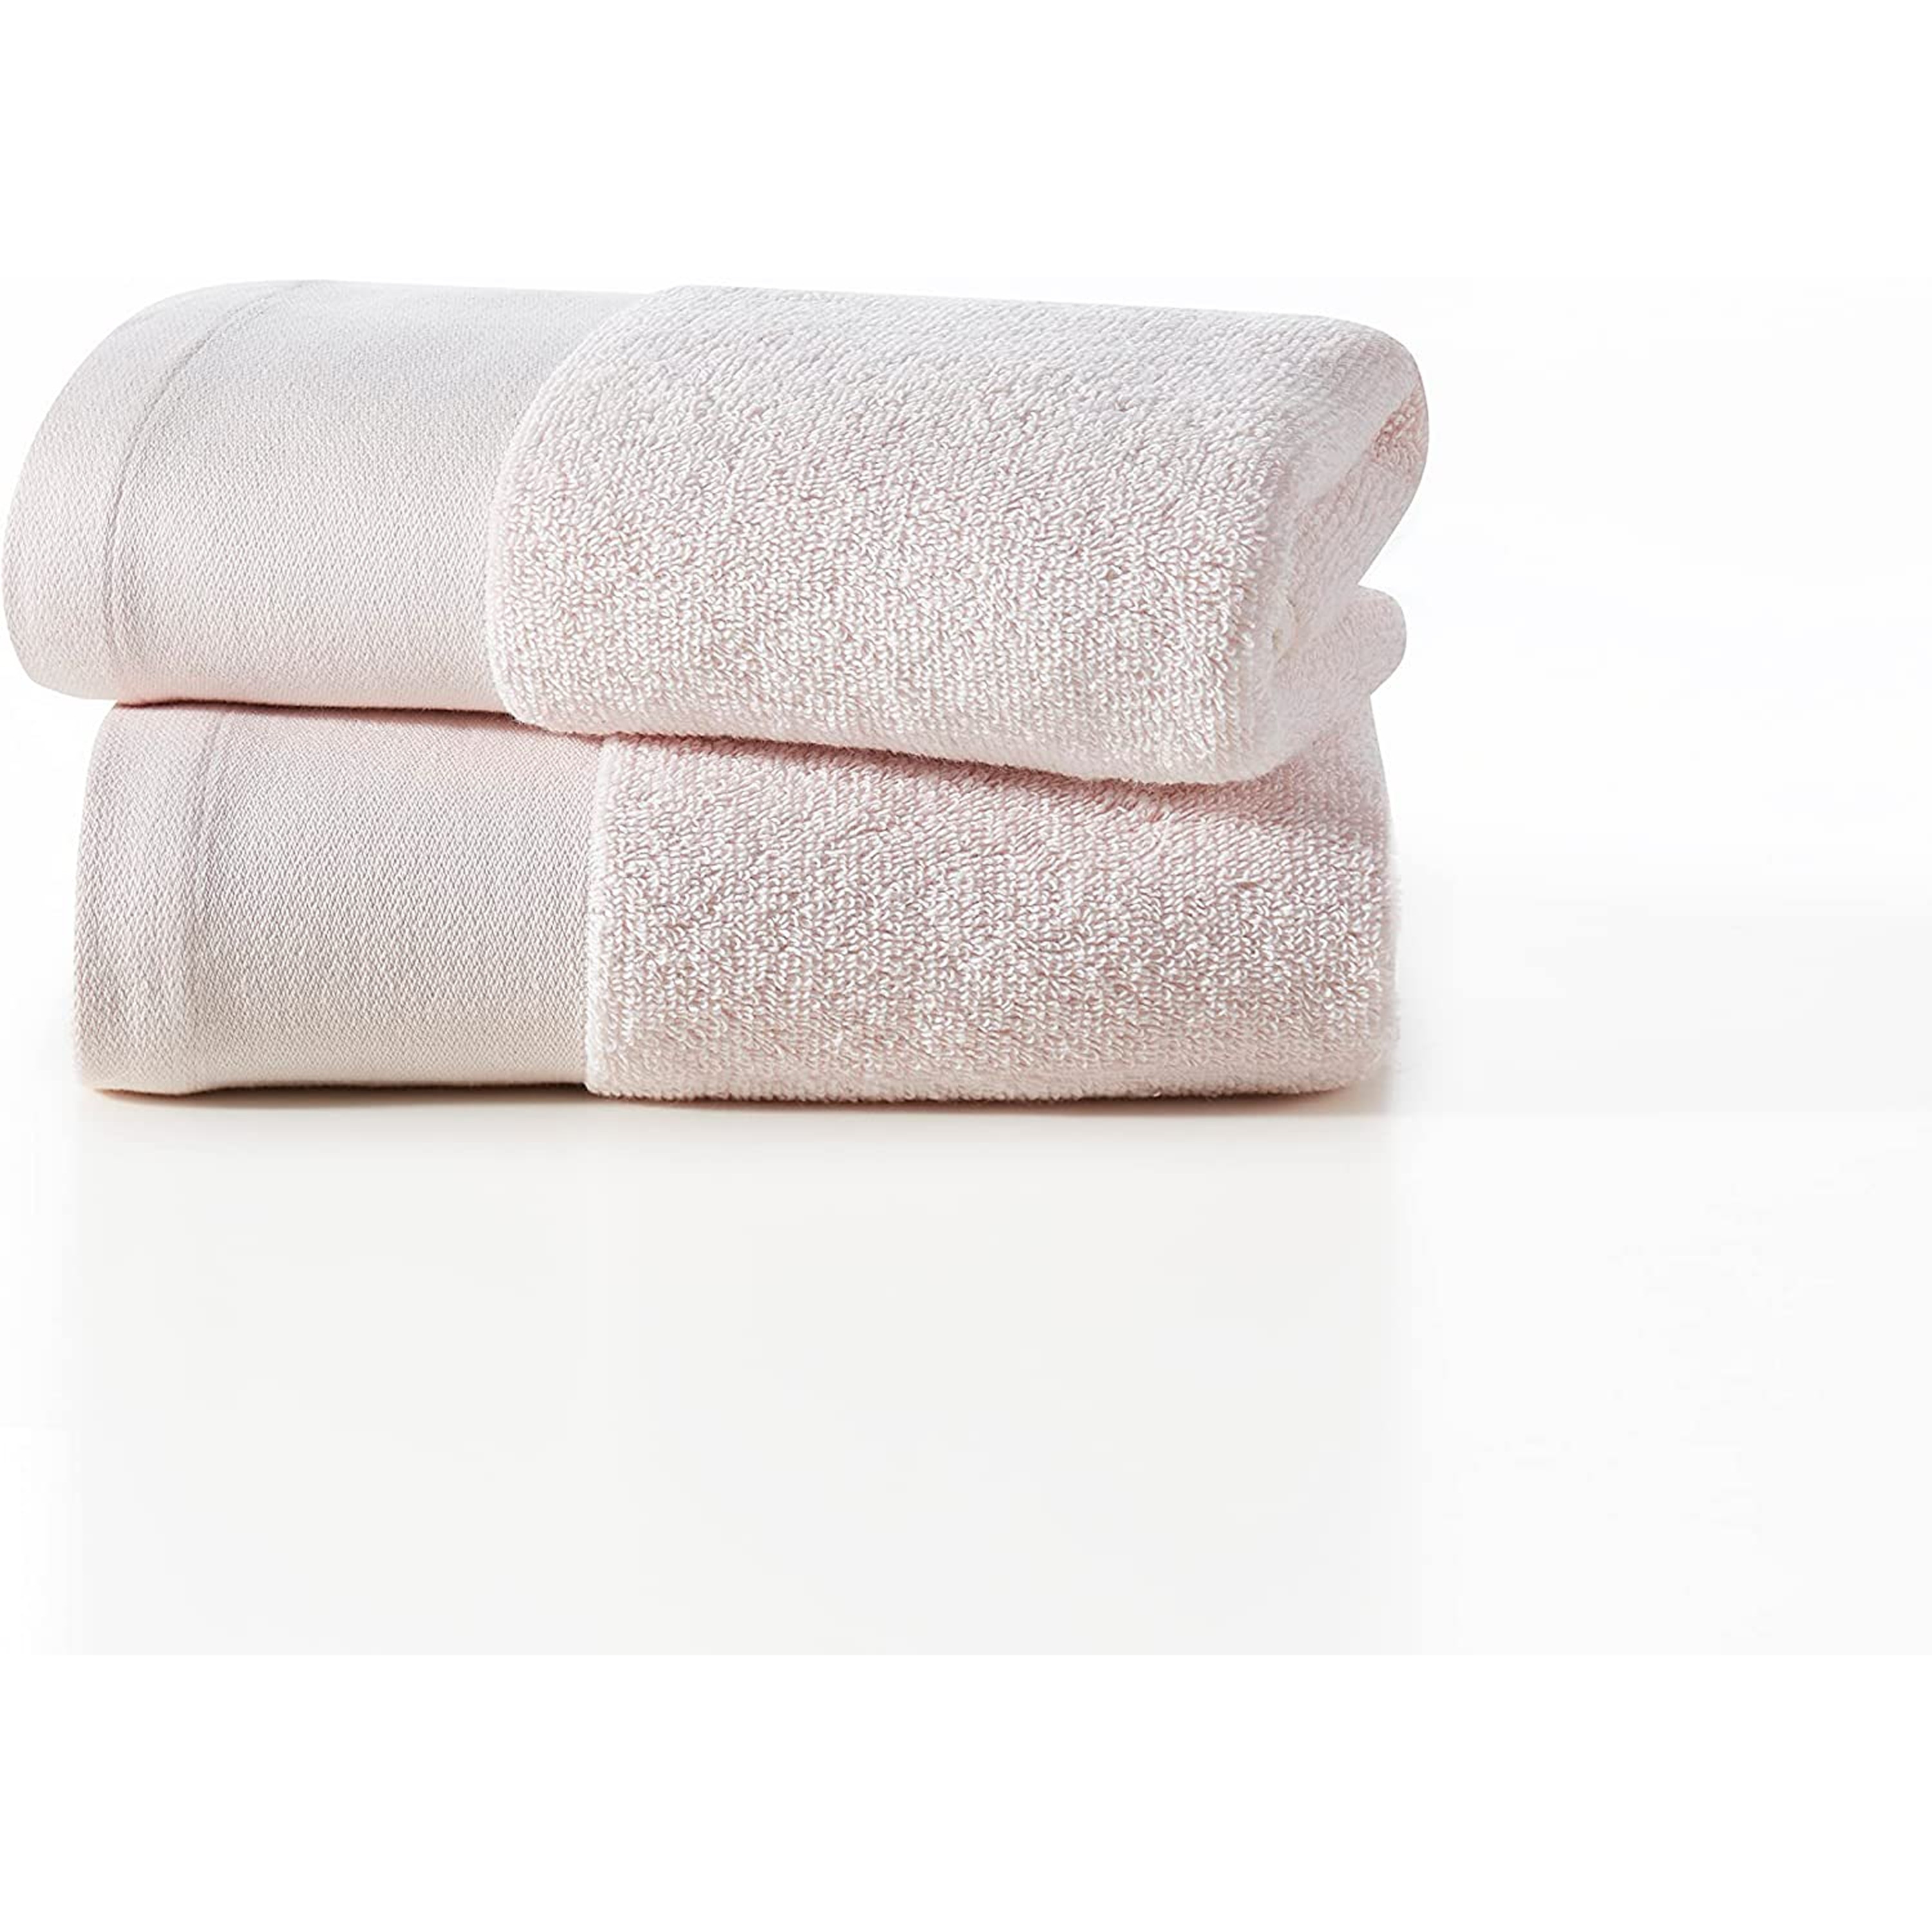 Bennett and Shea 8-Piece Luxury Bath Towel Set, 100% Turkish Cotton Loops,  Premi